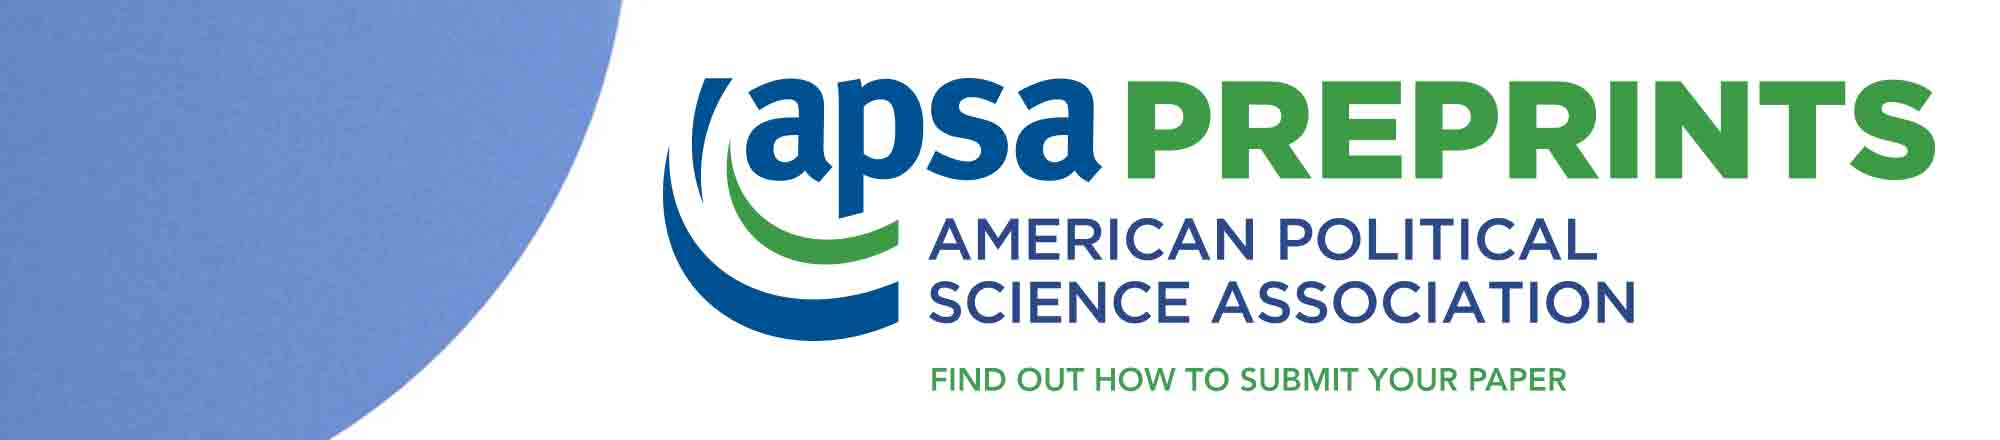 APSA Preprints Hero banner